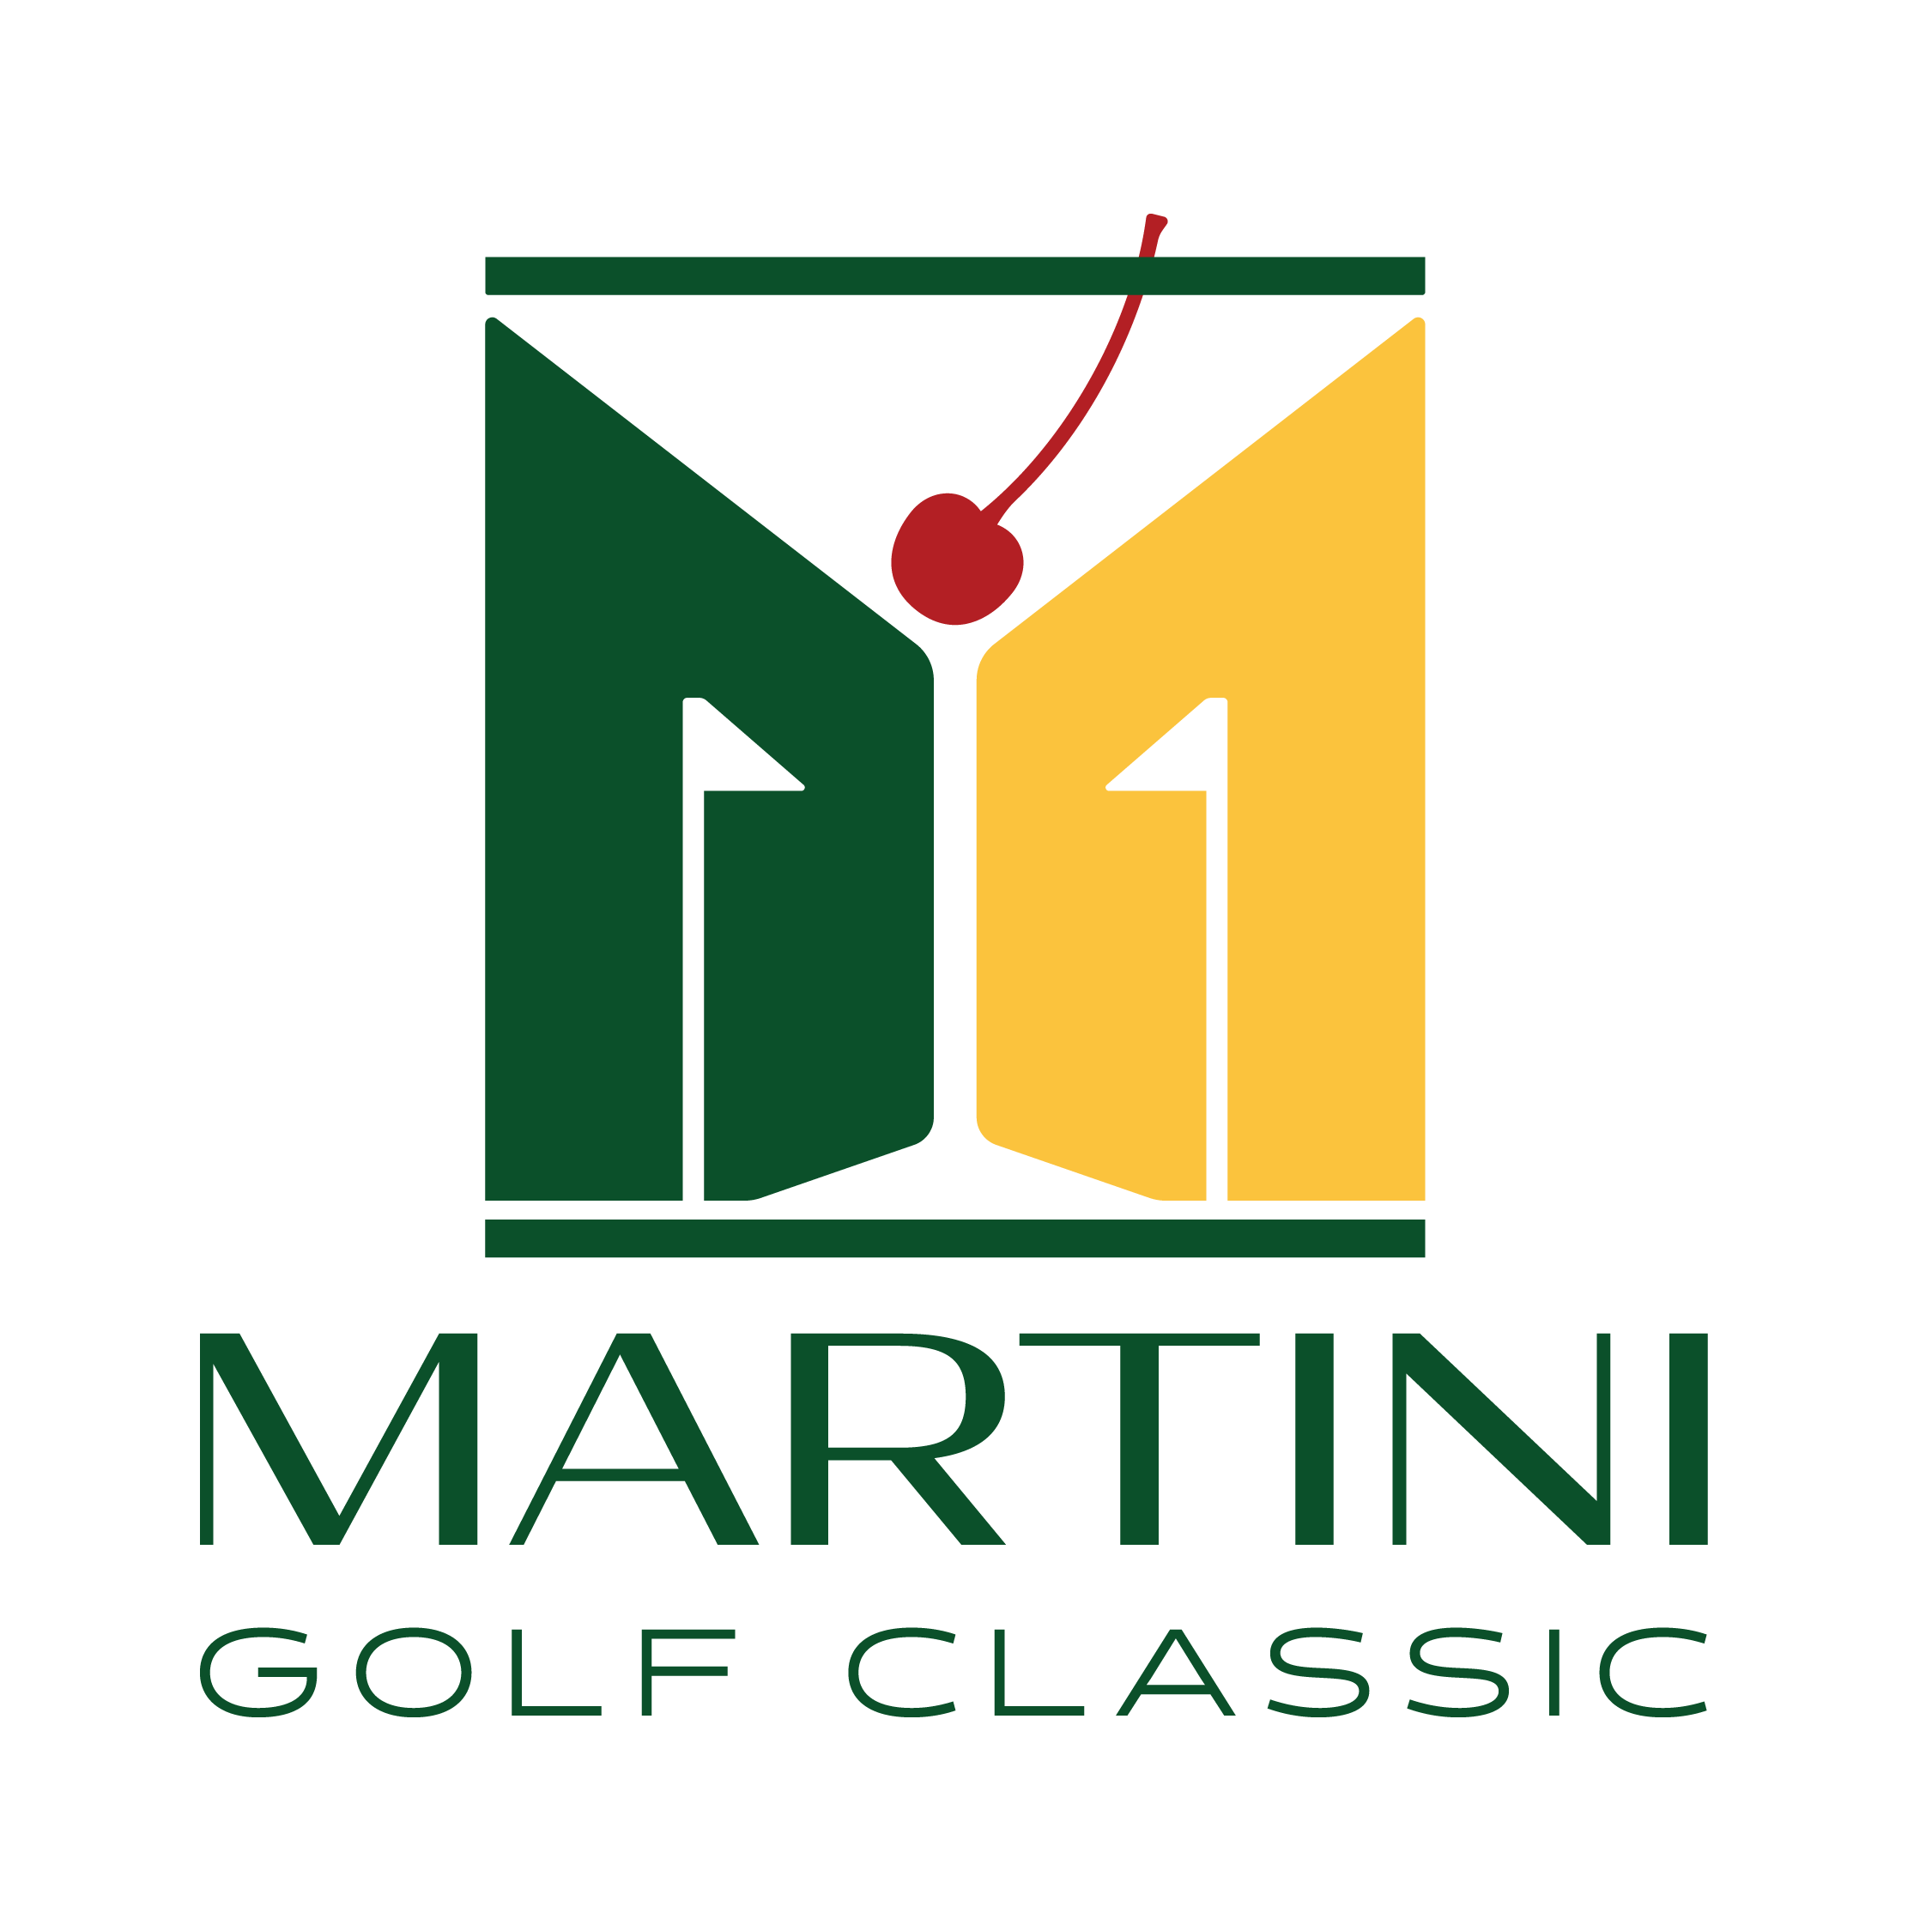 Martini Golf Classic Logo on Transparent Background